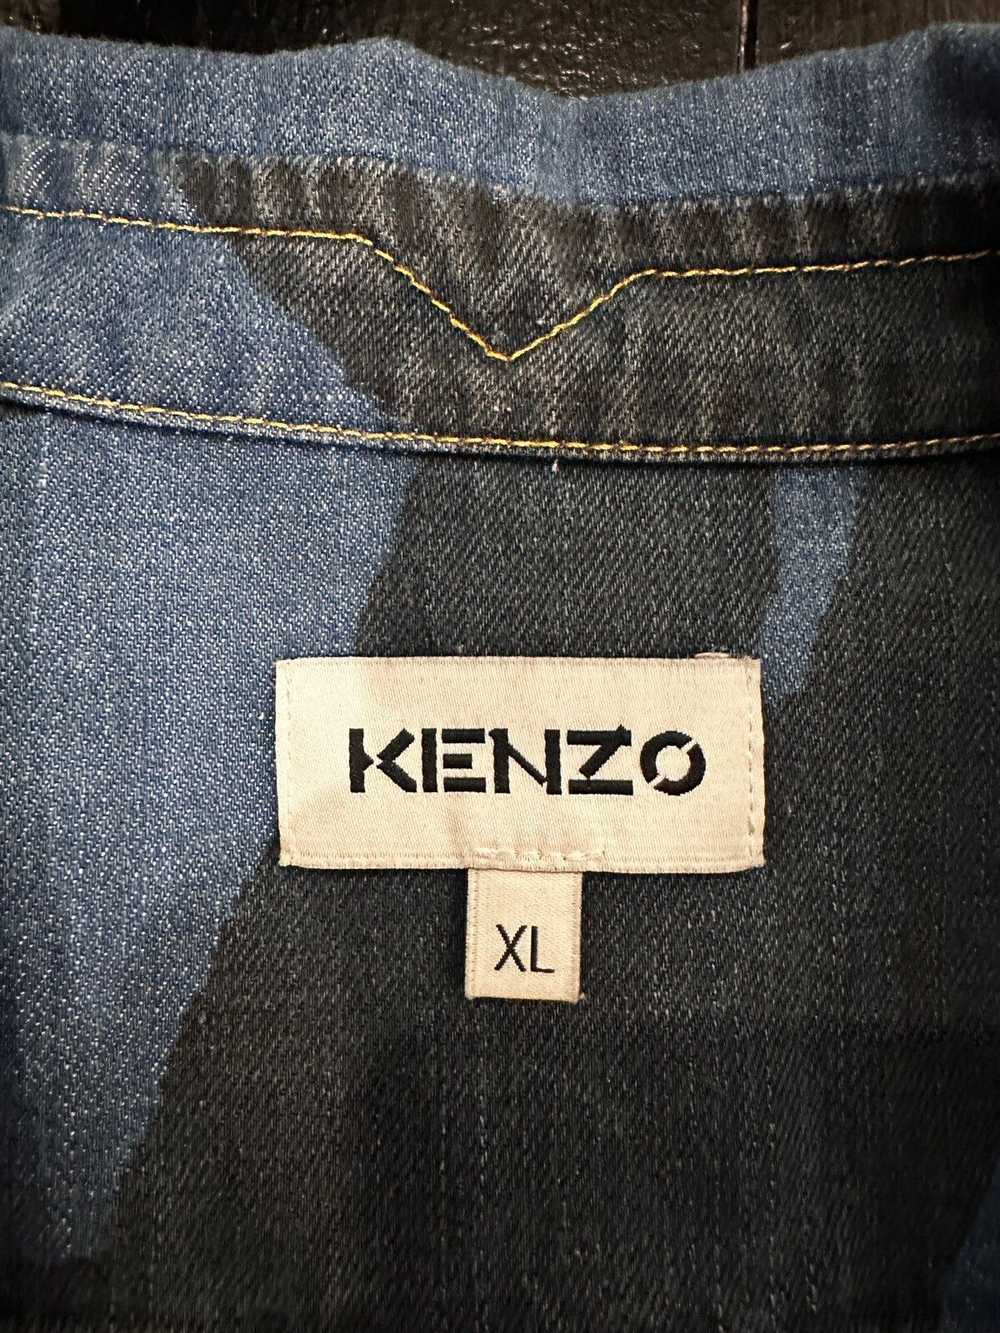 Kenzo Kenzo Tiger Denim Overshirt - image 3